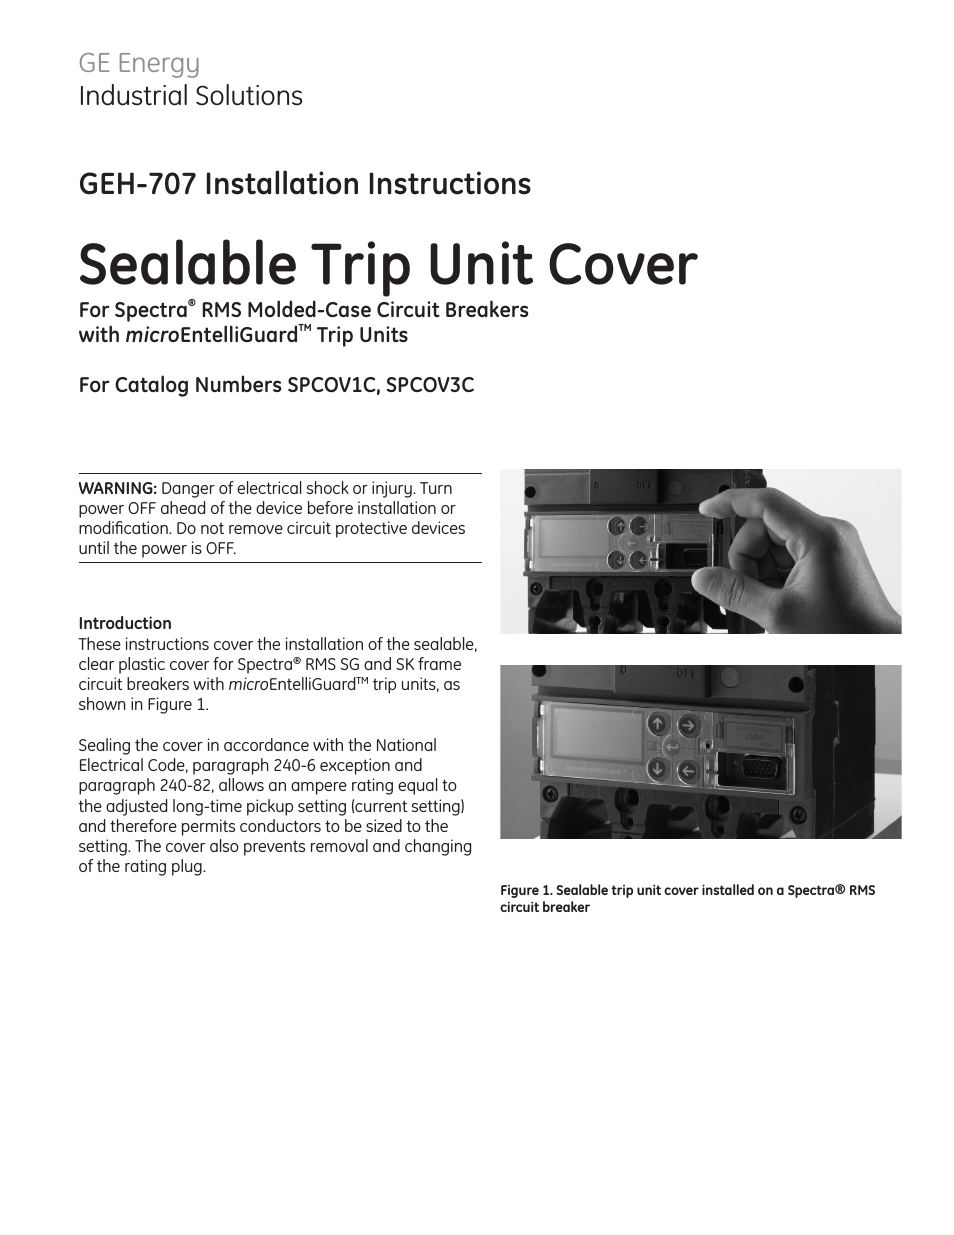 Sealable Trip Unit Cover